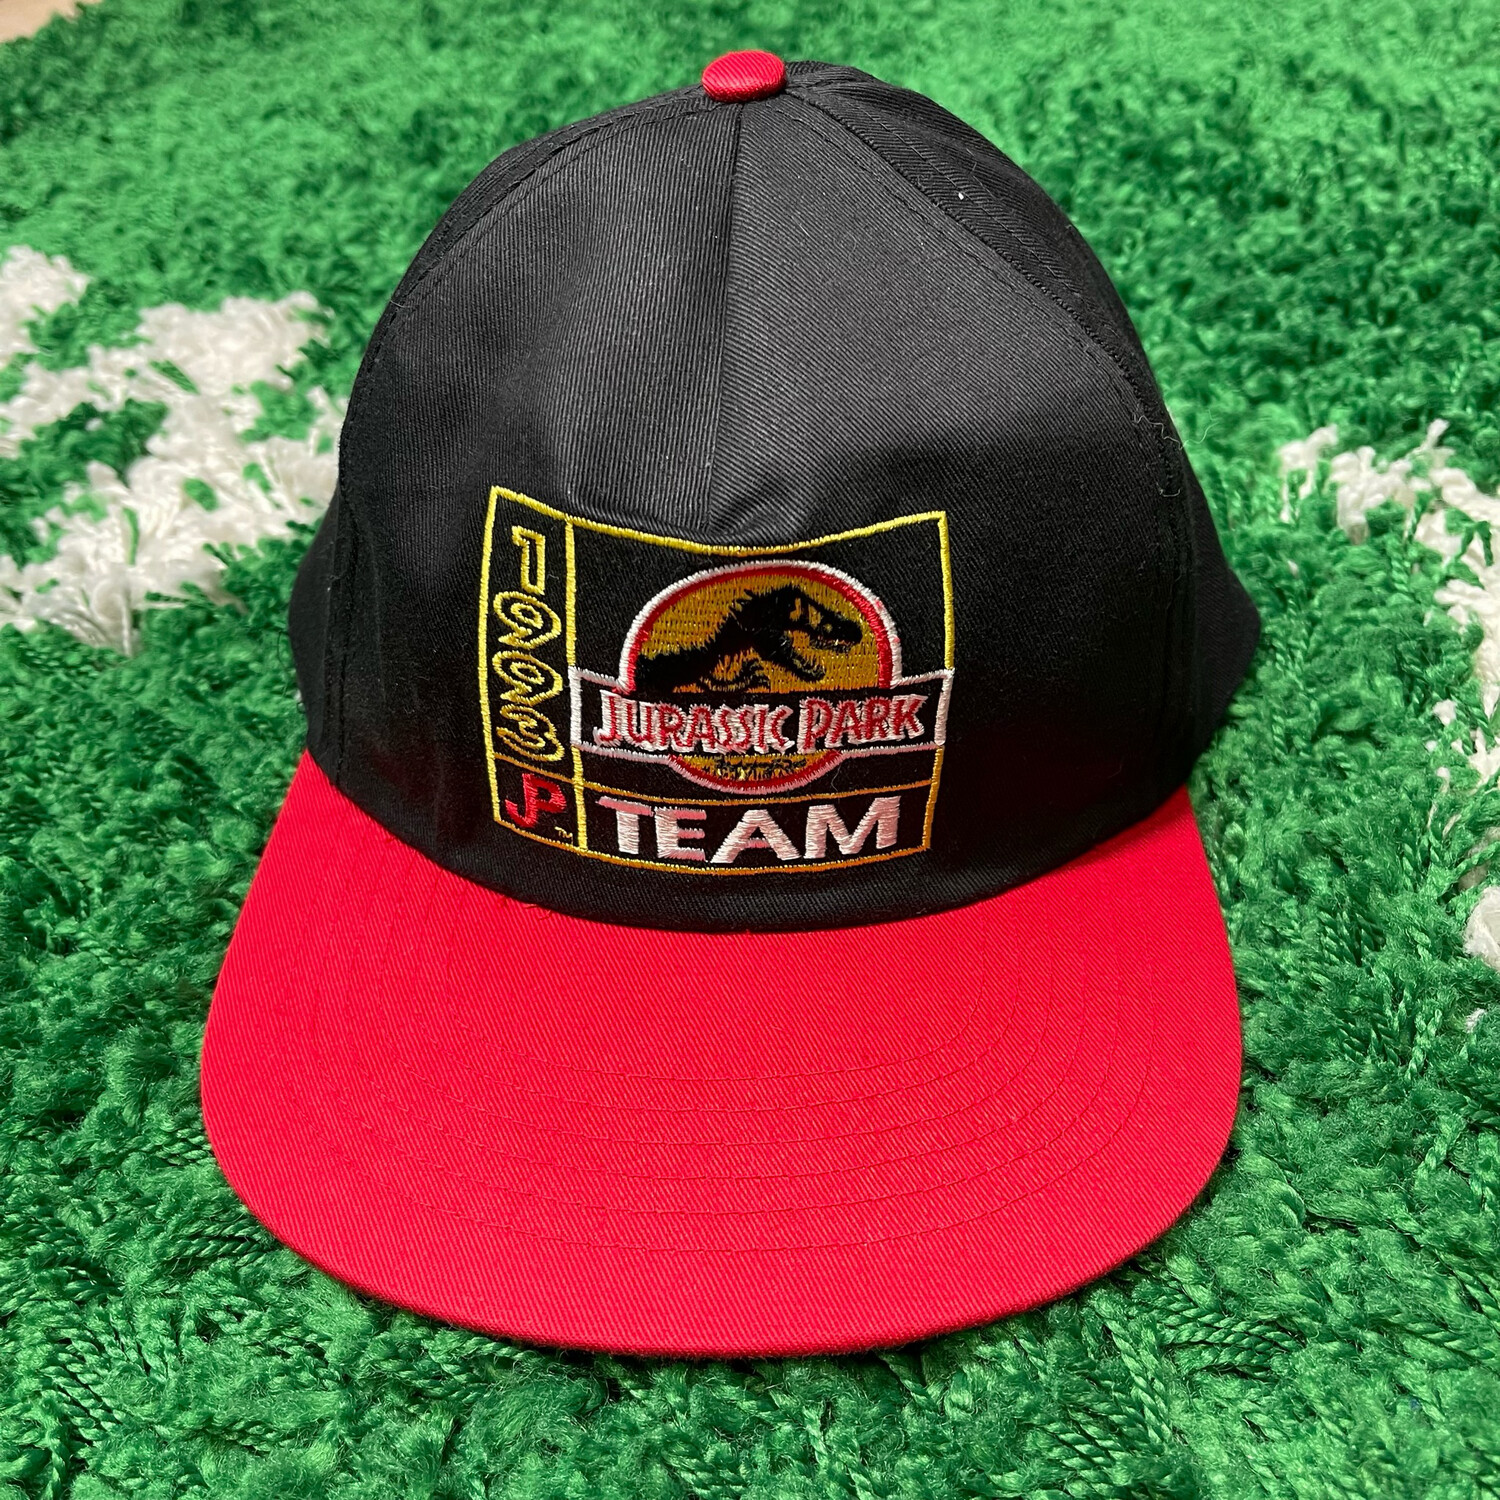 Jurassic Park Team Snapback Hat